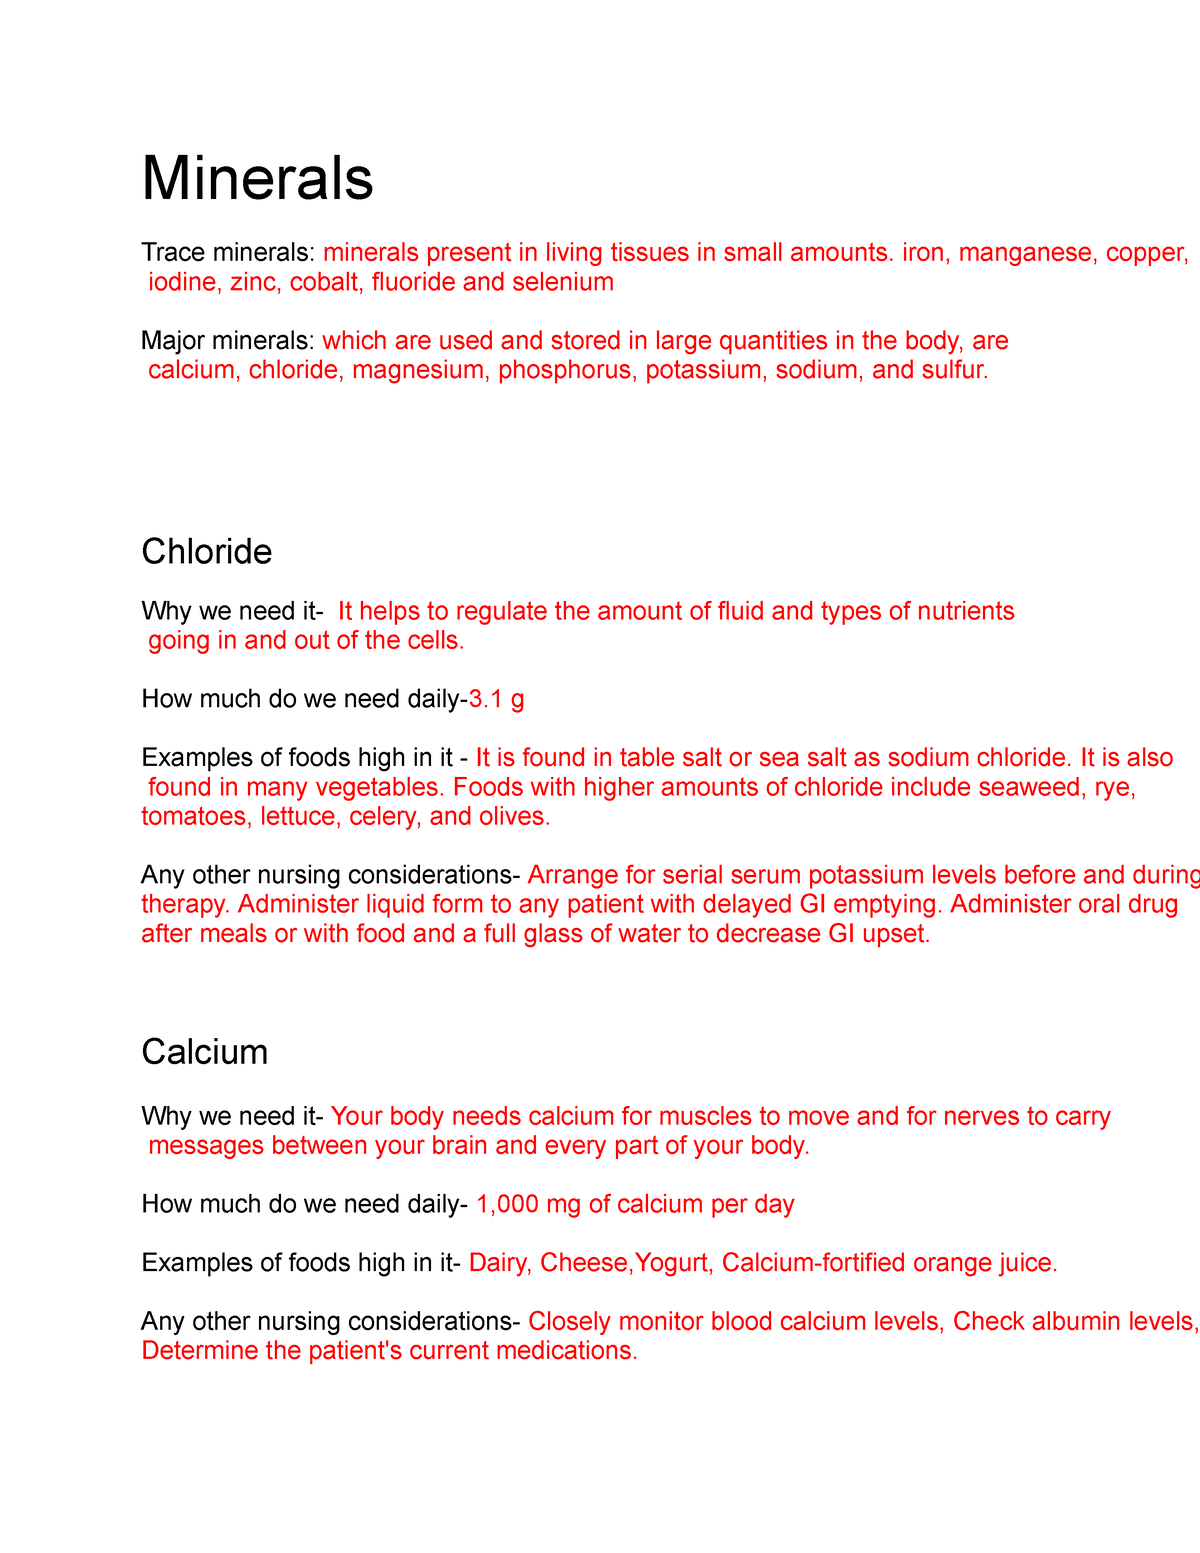 Minerals - Minerals Trace minerals: minerals present in living tissues ...